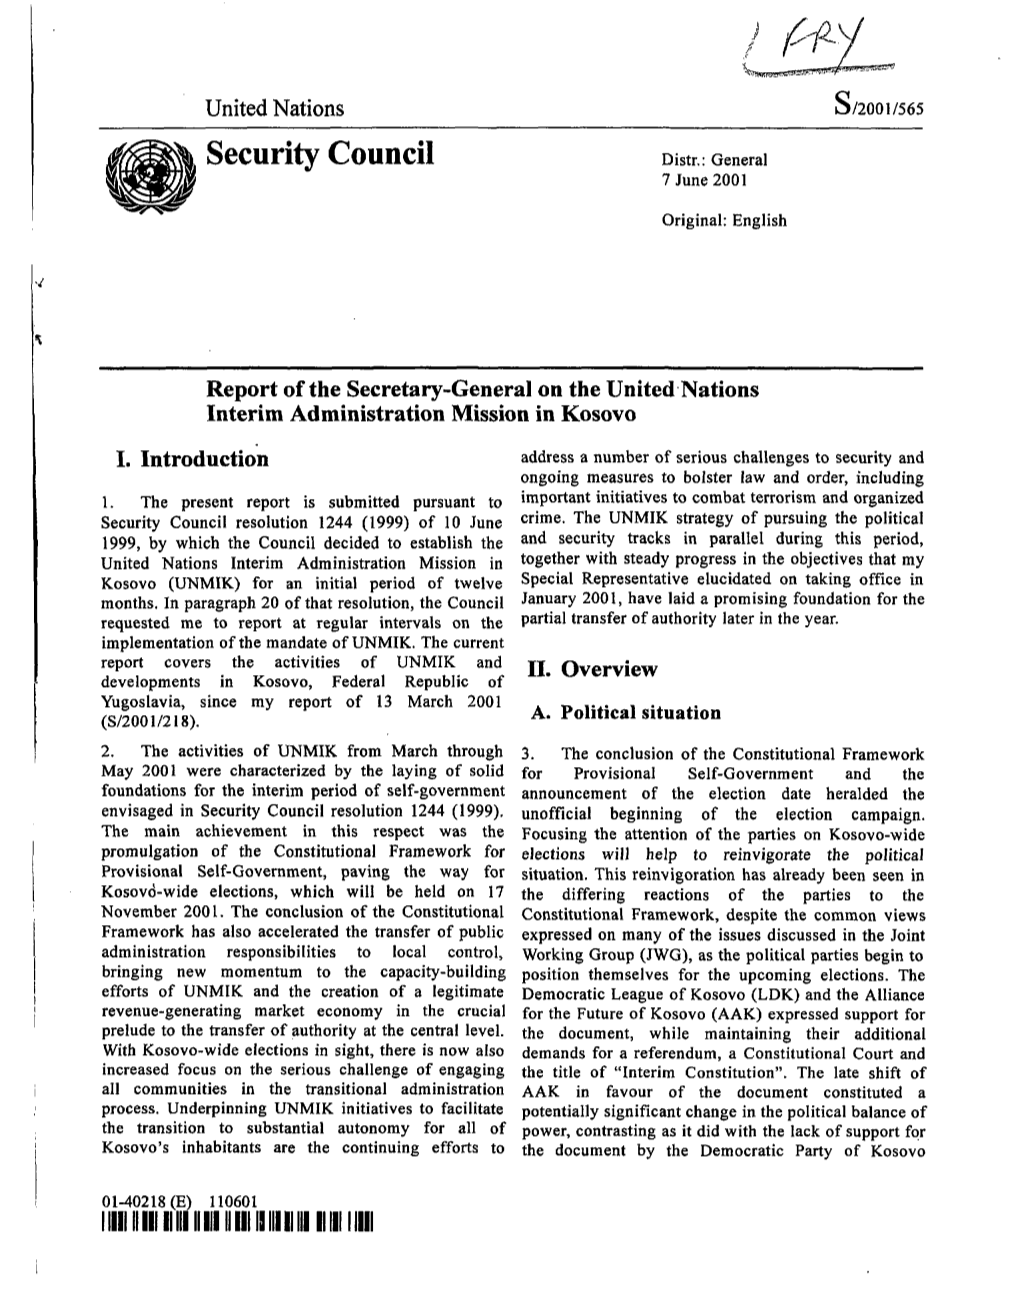 Security Council Distr.: General 7 June 2001